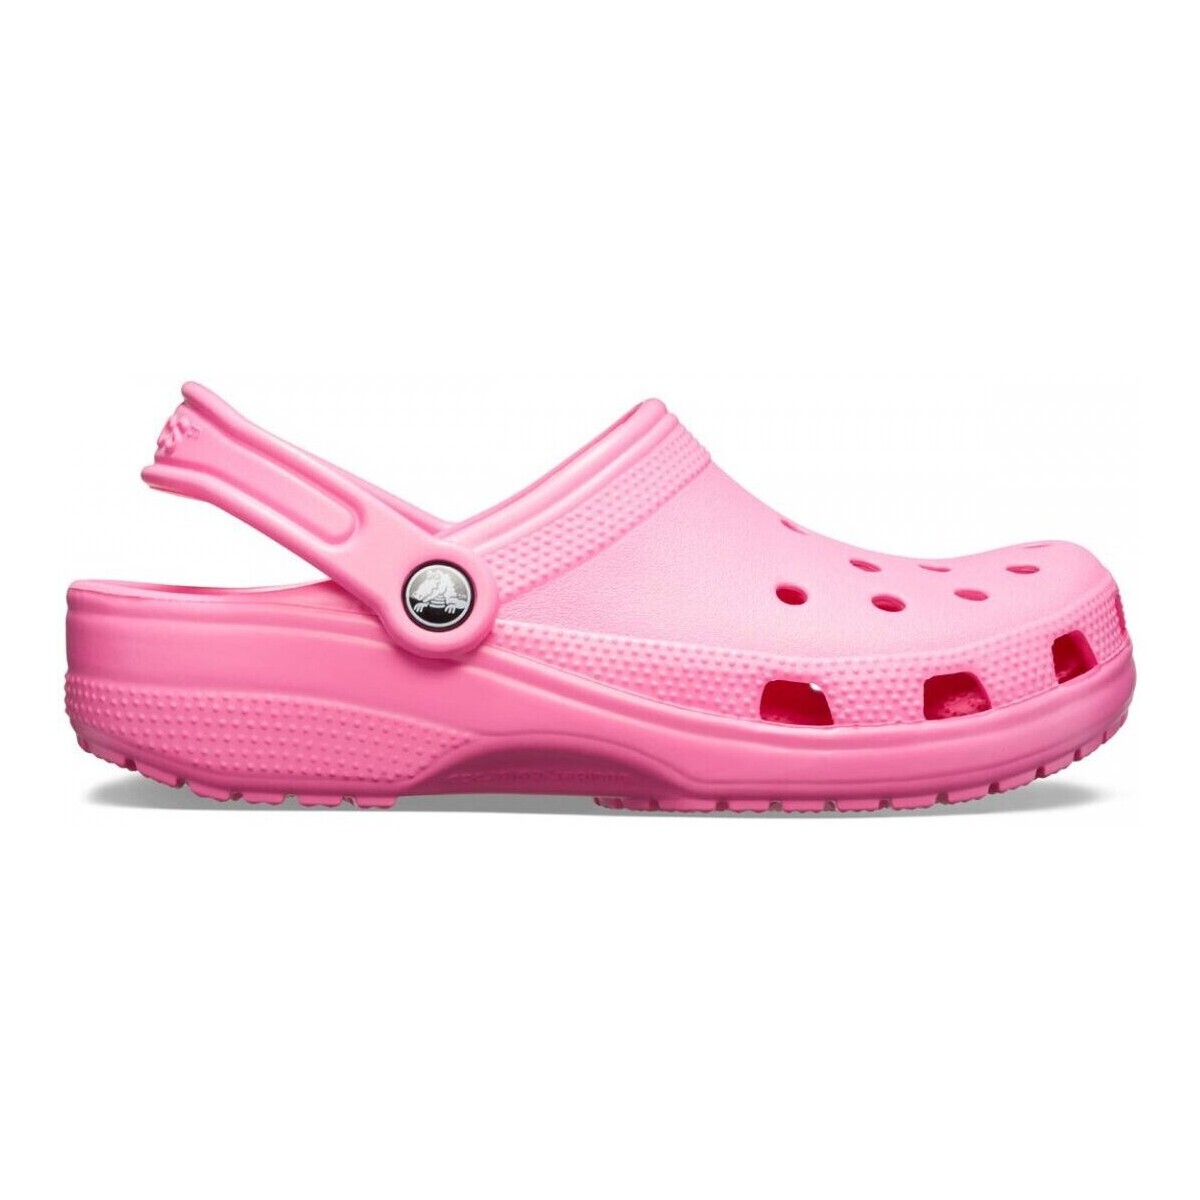 Sapatos Mulher Sandálias Crocs CR.10001-PILE Pink lemonade